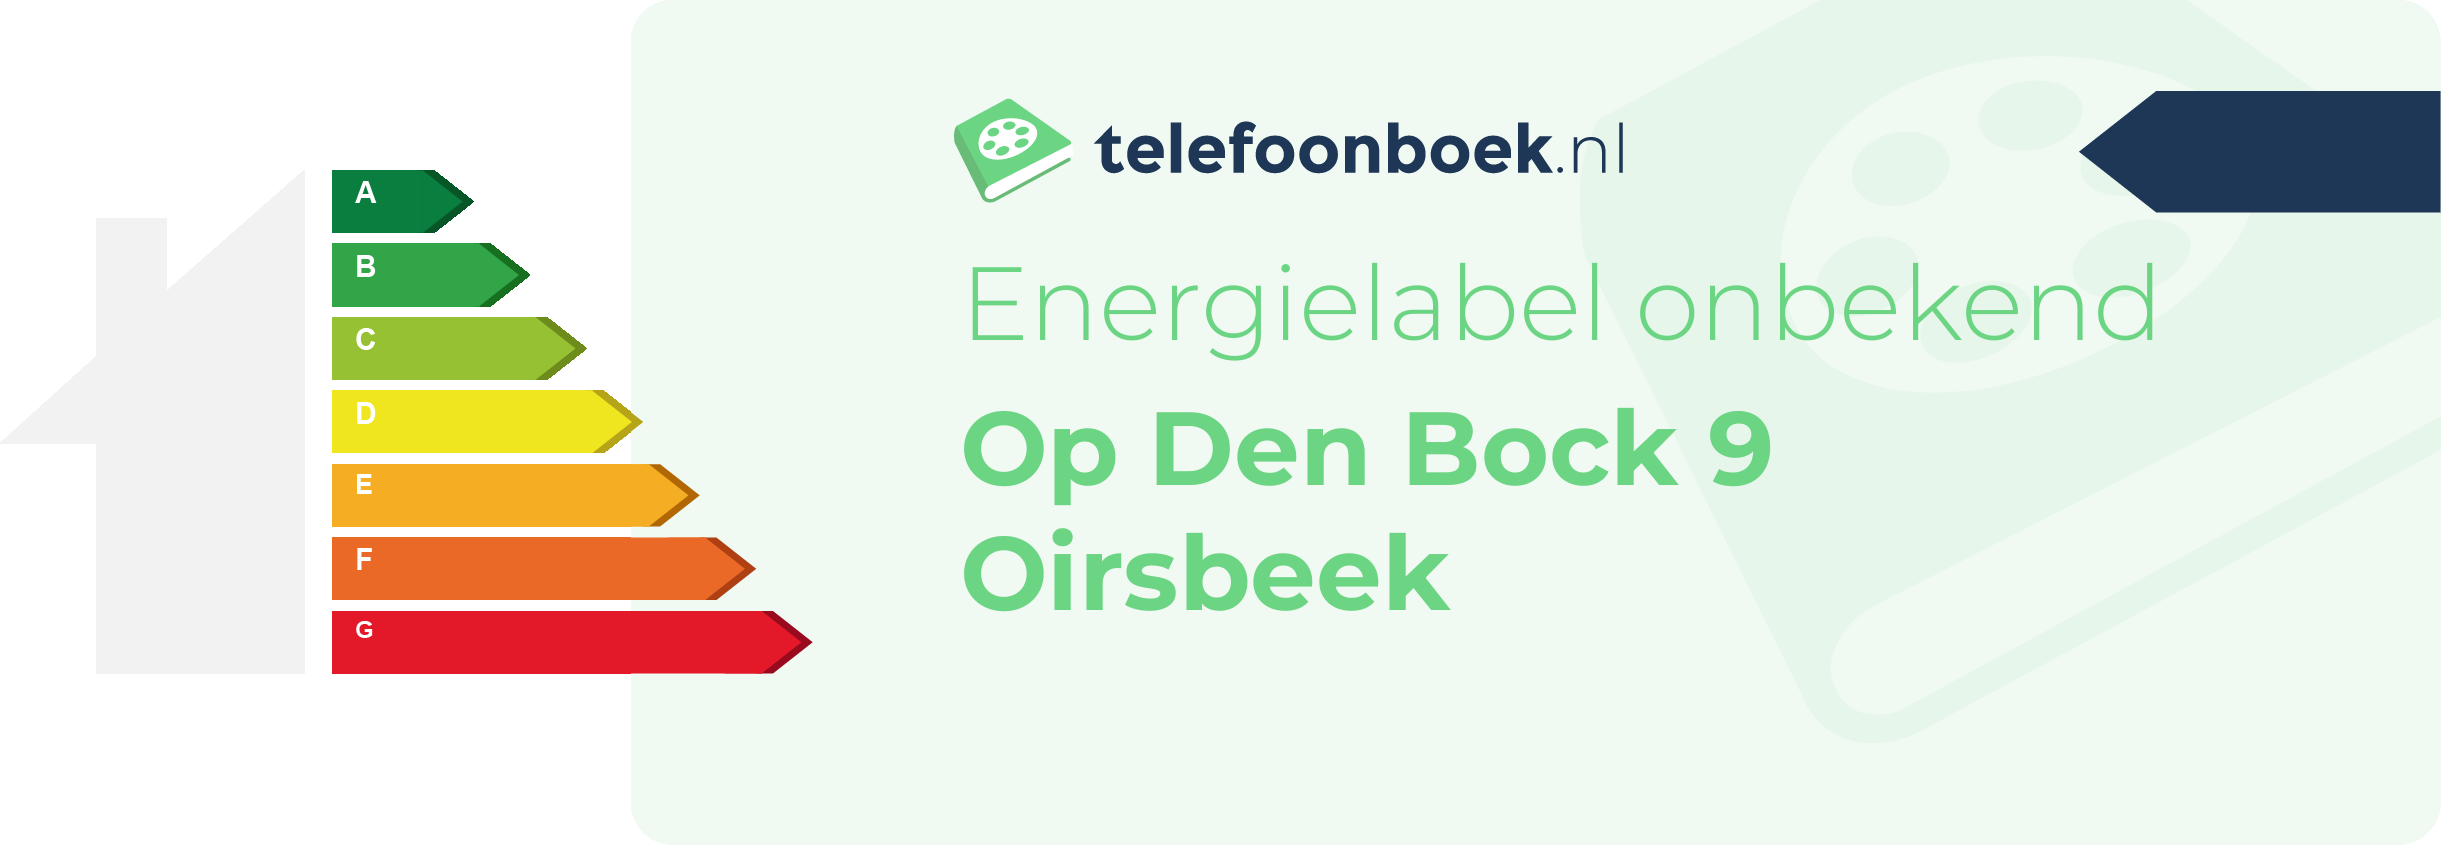 Energielabel Op Den Bock 9 Oirsbeek